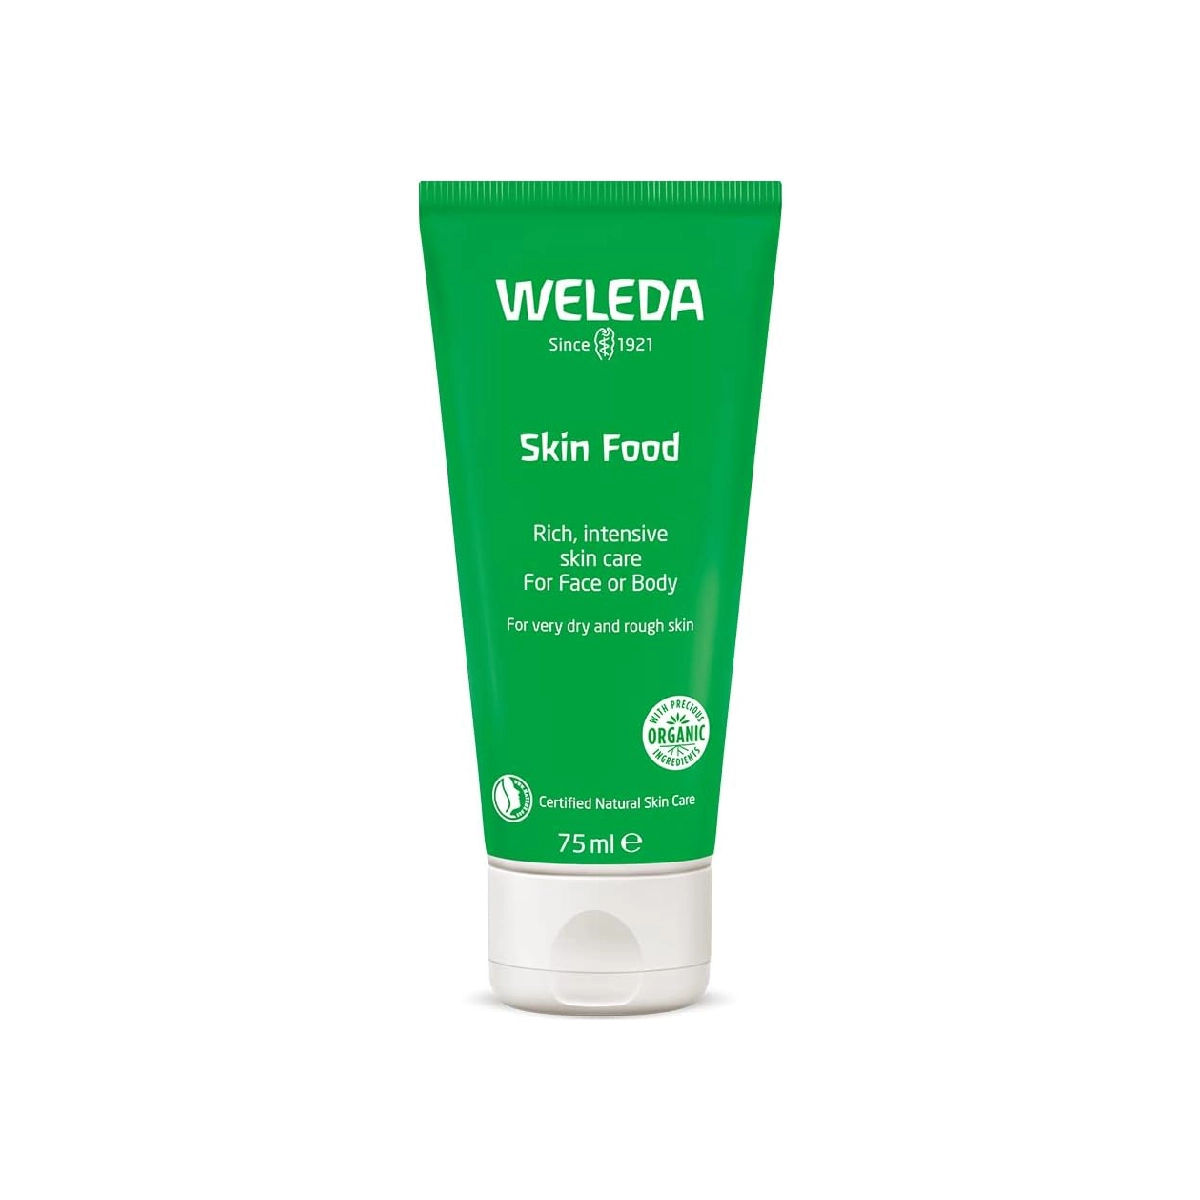 WELEDA Skin Food tube with natural ingredients for intense skin nourishment